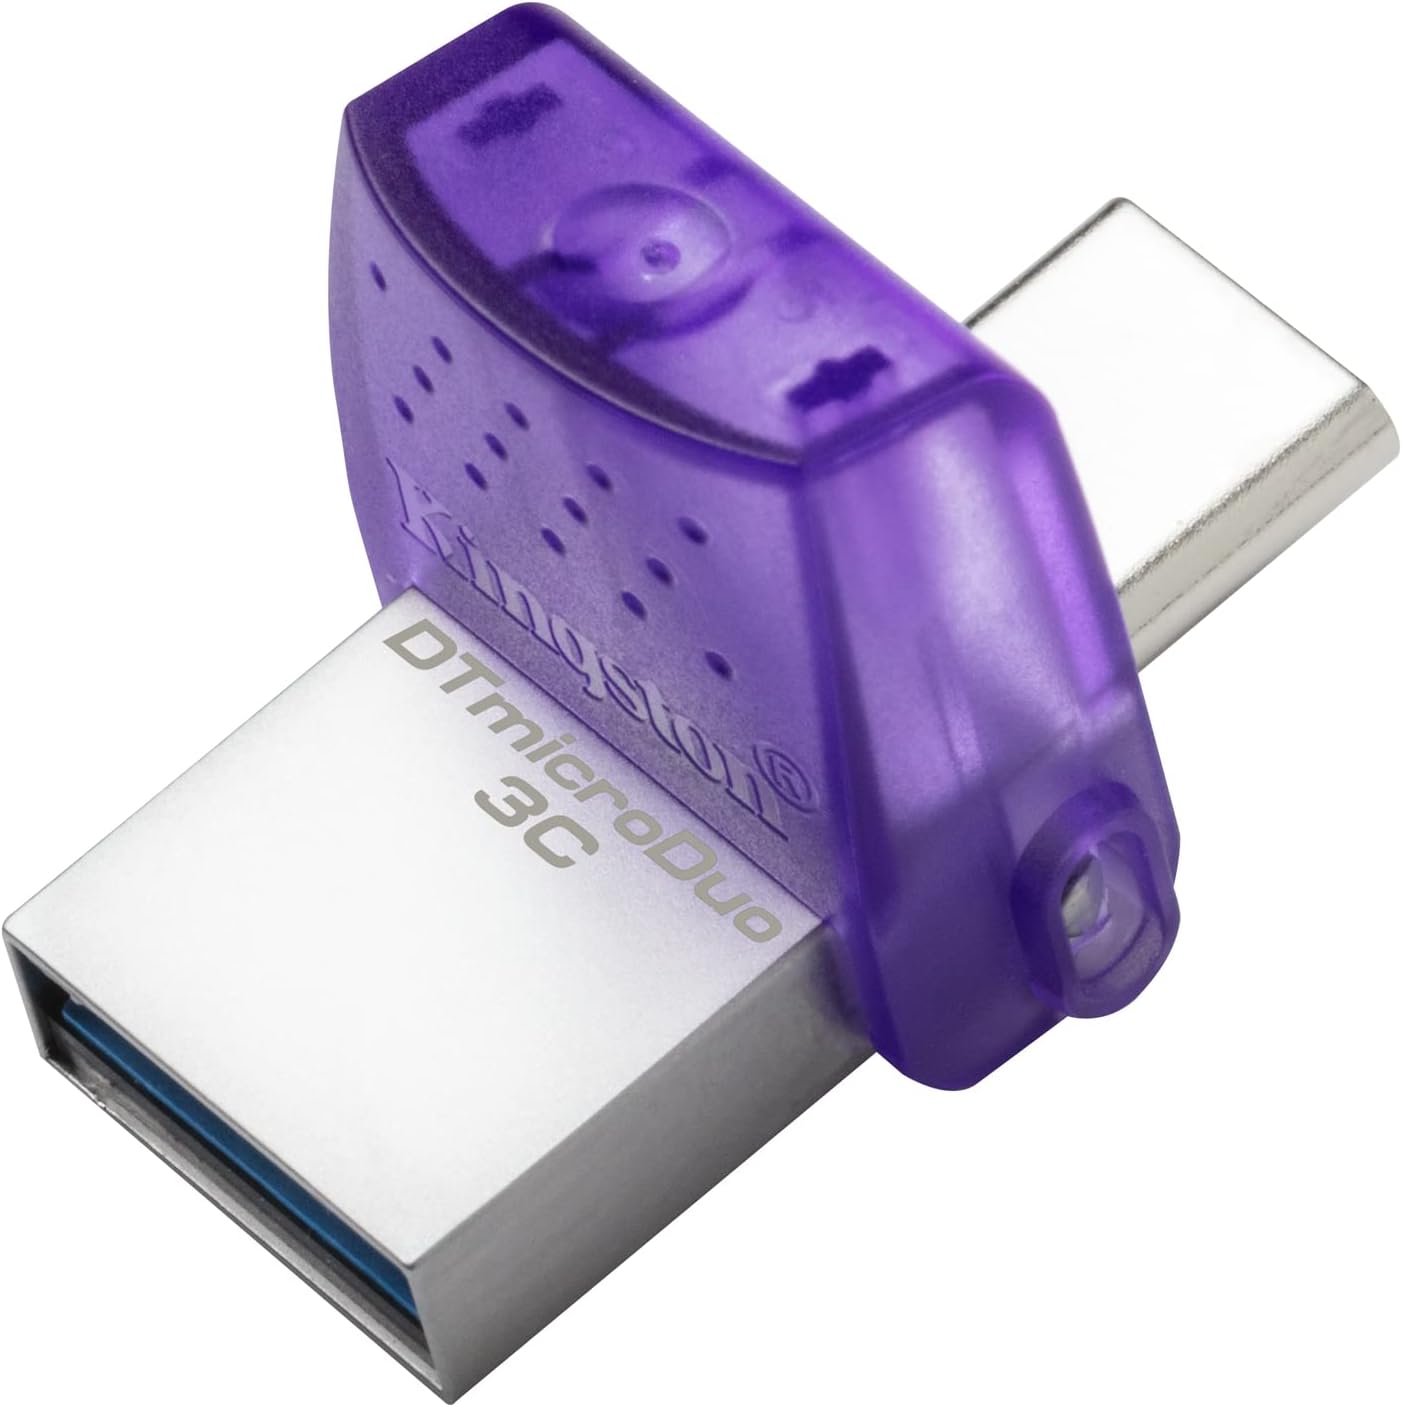 Kingston DTDUO3CG3/256GB DataTraveler microDuo 3C USB Flash Drive